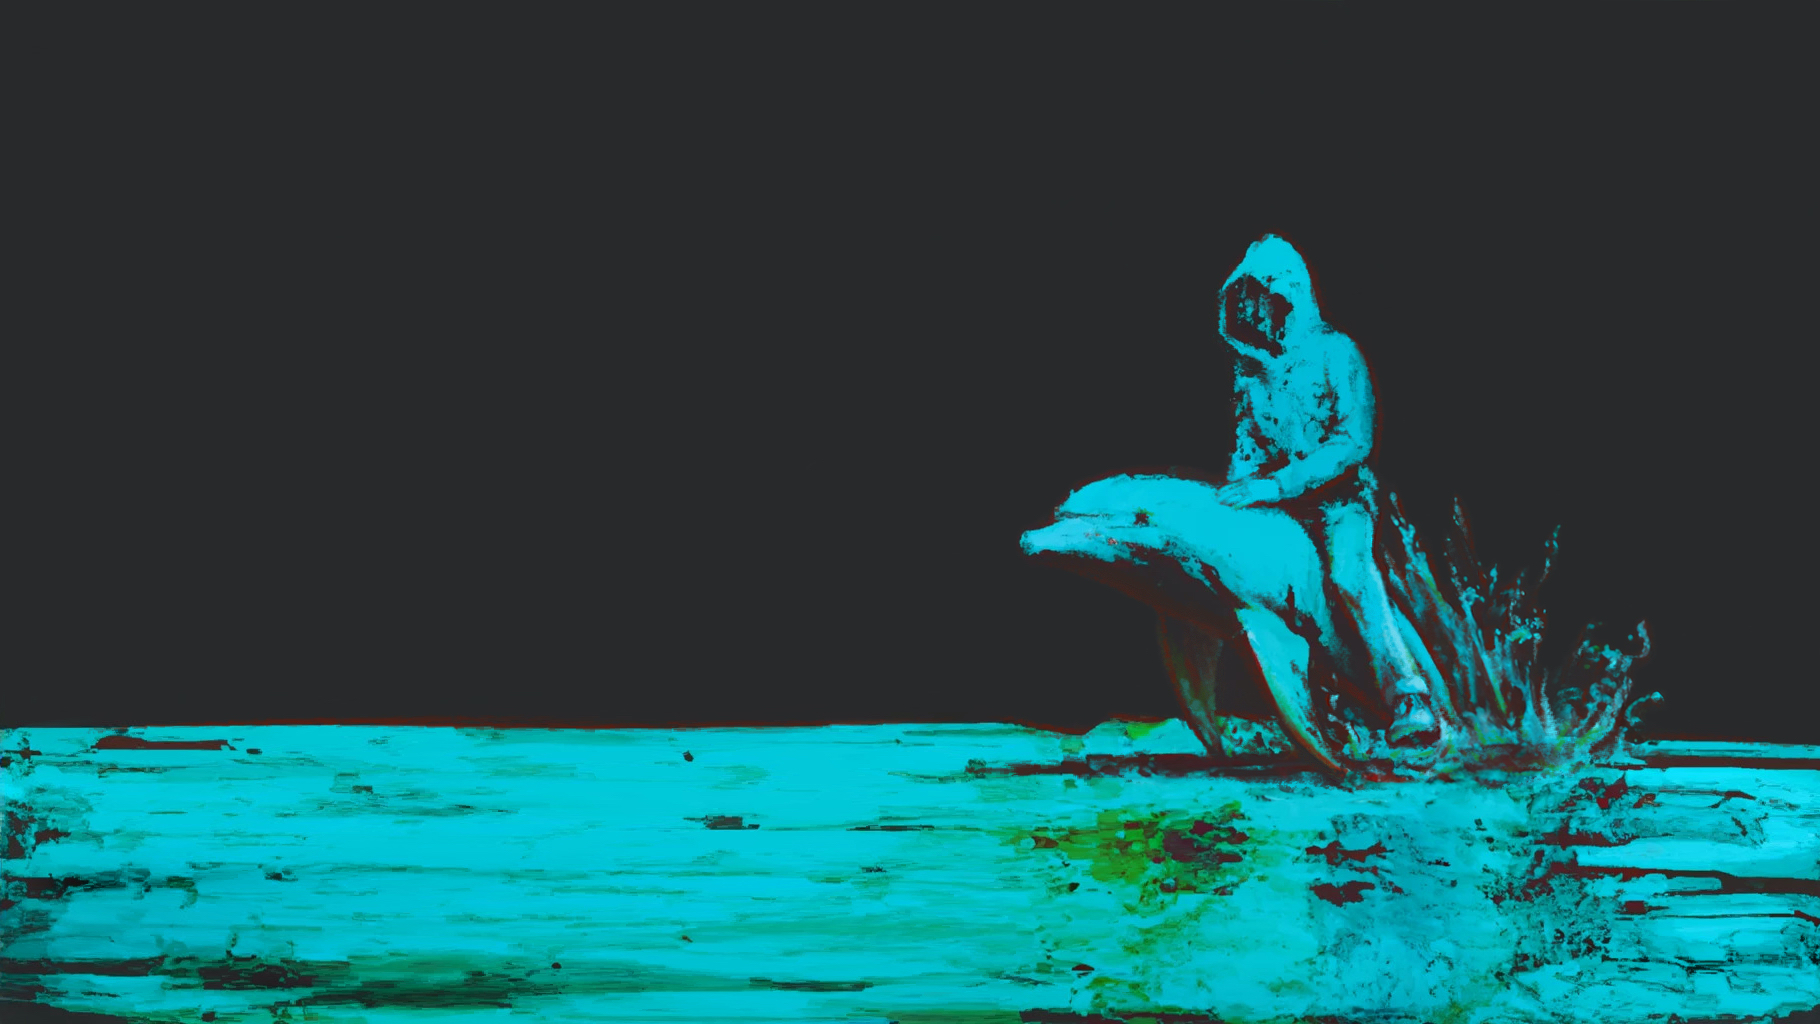 Album artwork for Atlantis depicting a shady, hacker guy riding a dolphin